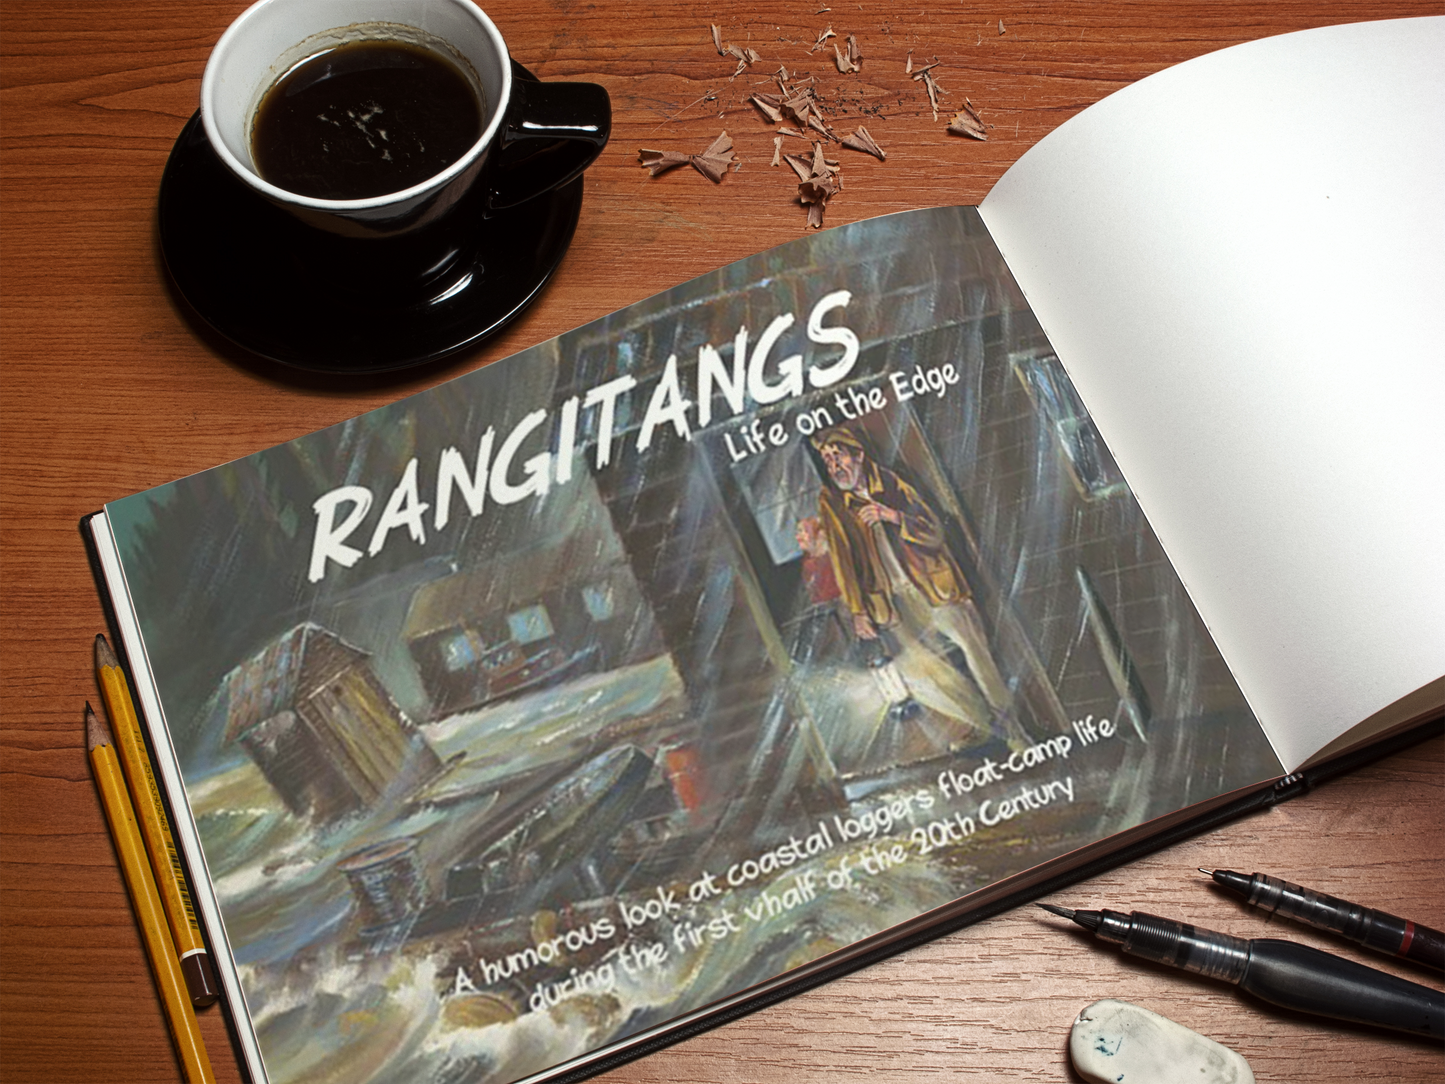 Rangitangs: Life on the Edge